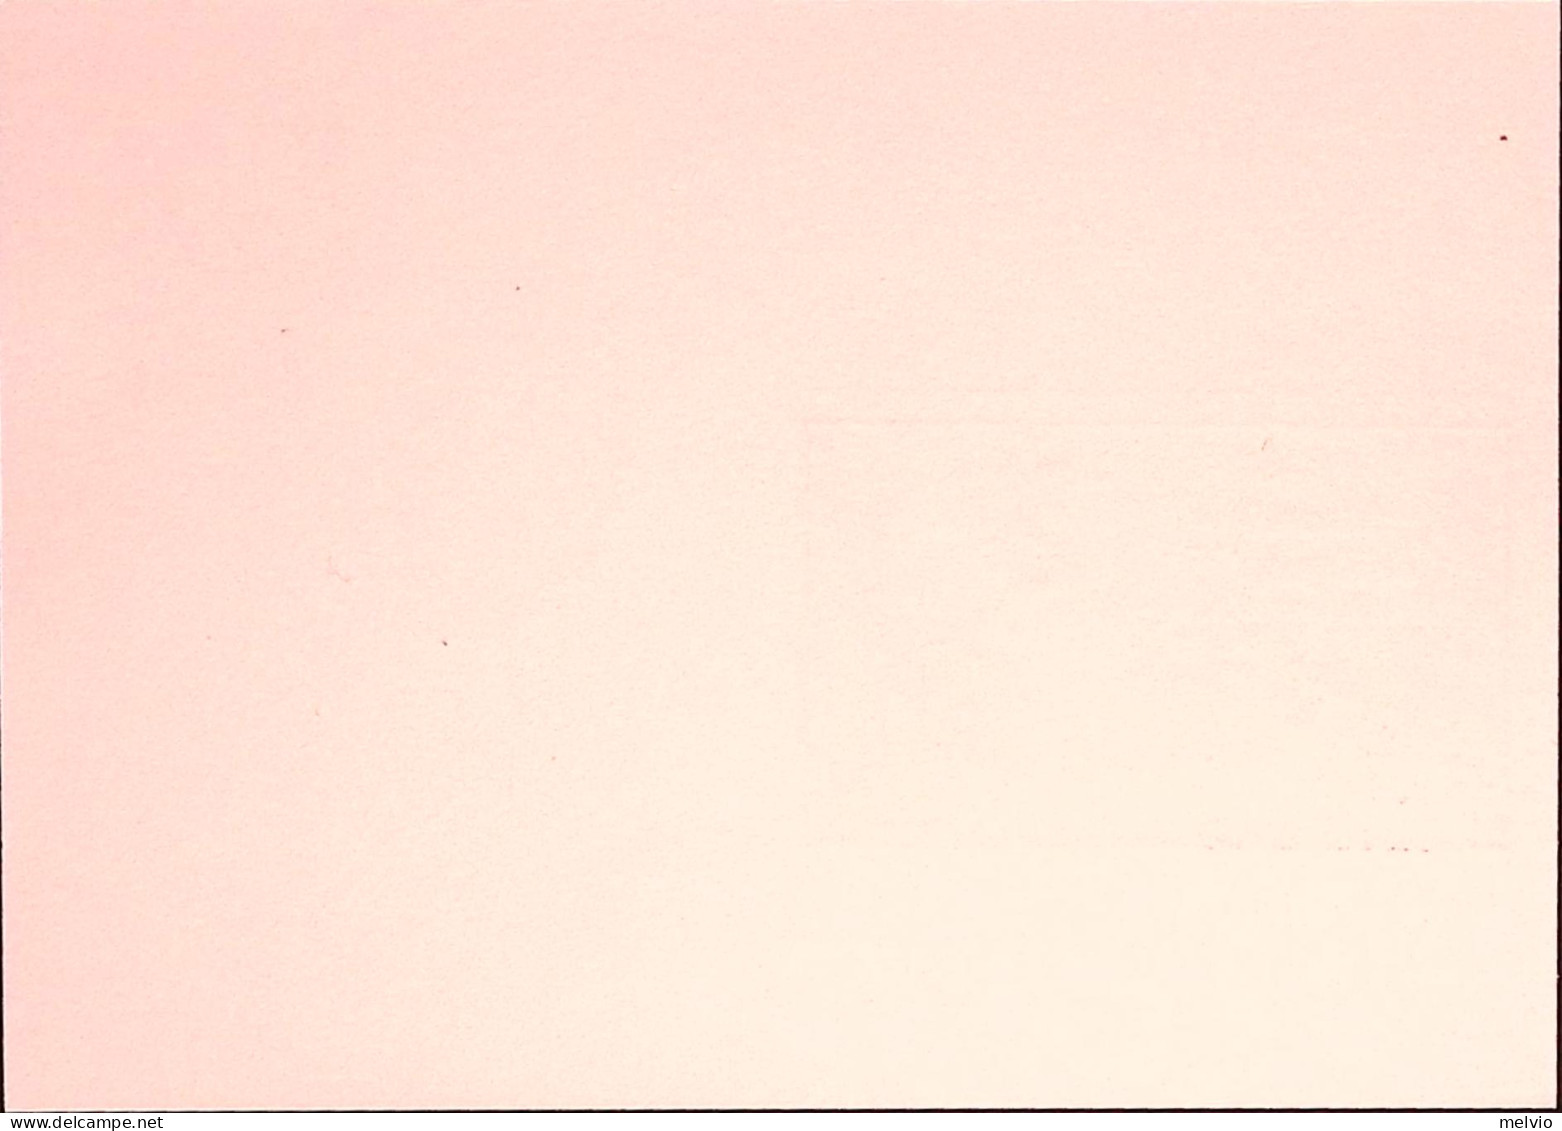 1995-MONTEVARCHI Cartolina Postale IPZS Lire 700 Con Ann Spec - Stamped Stationery